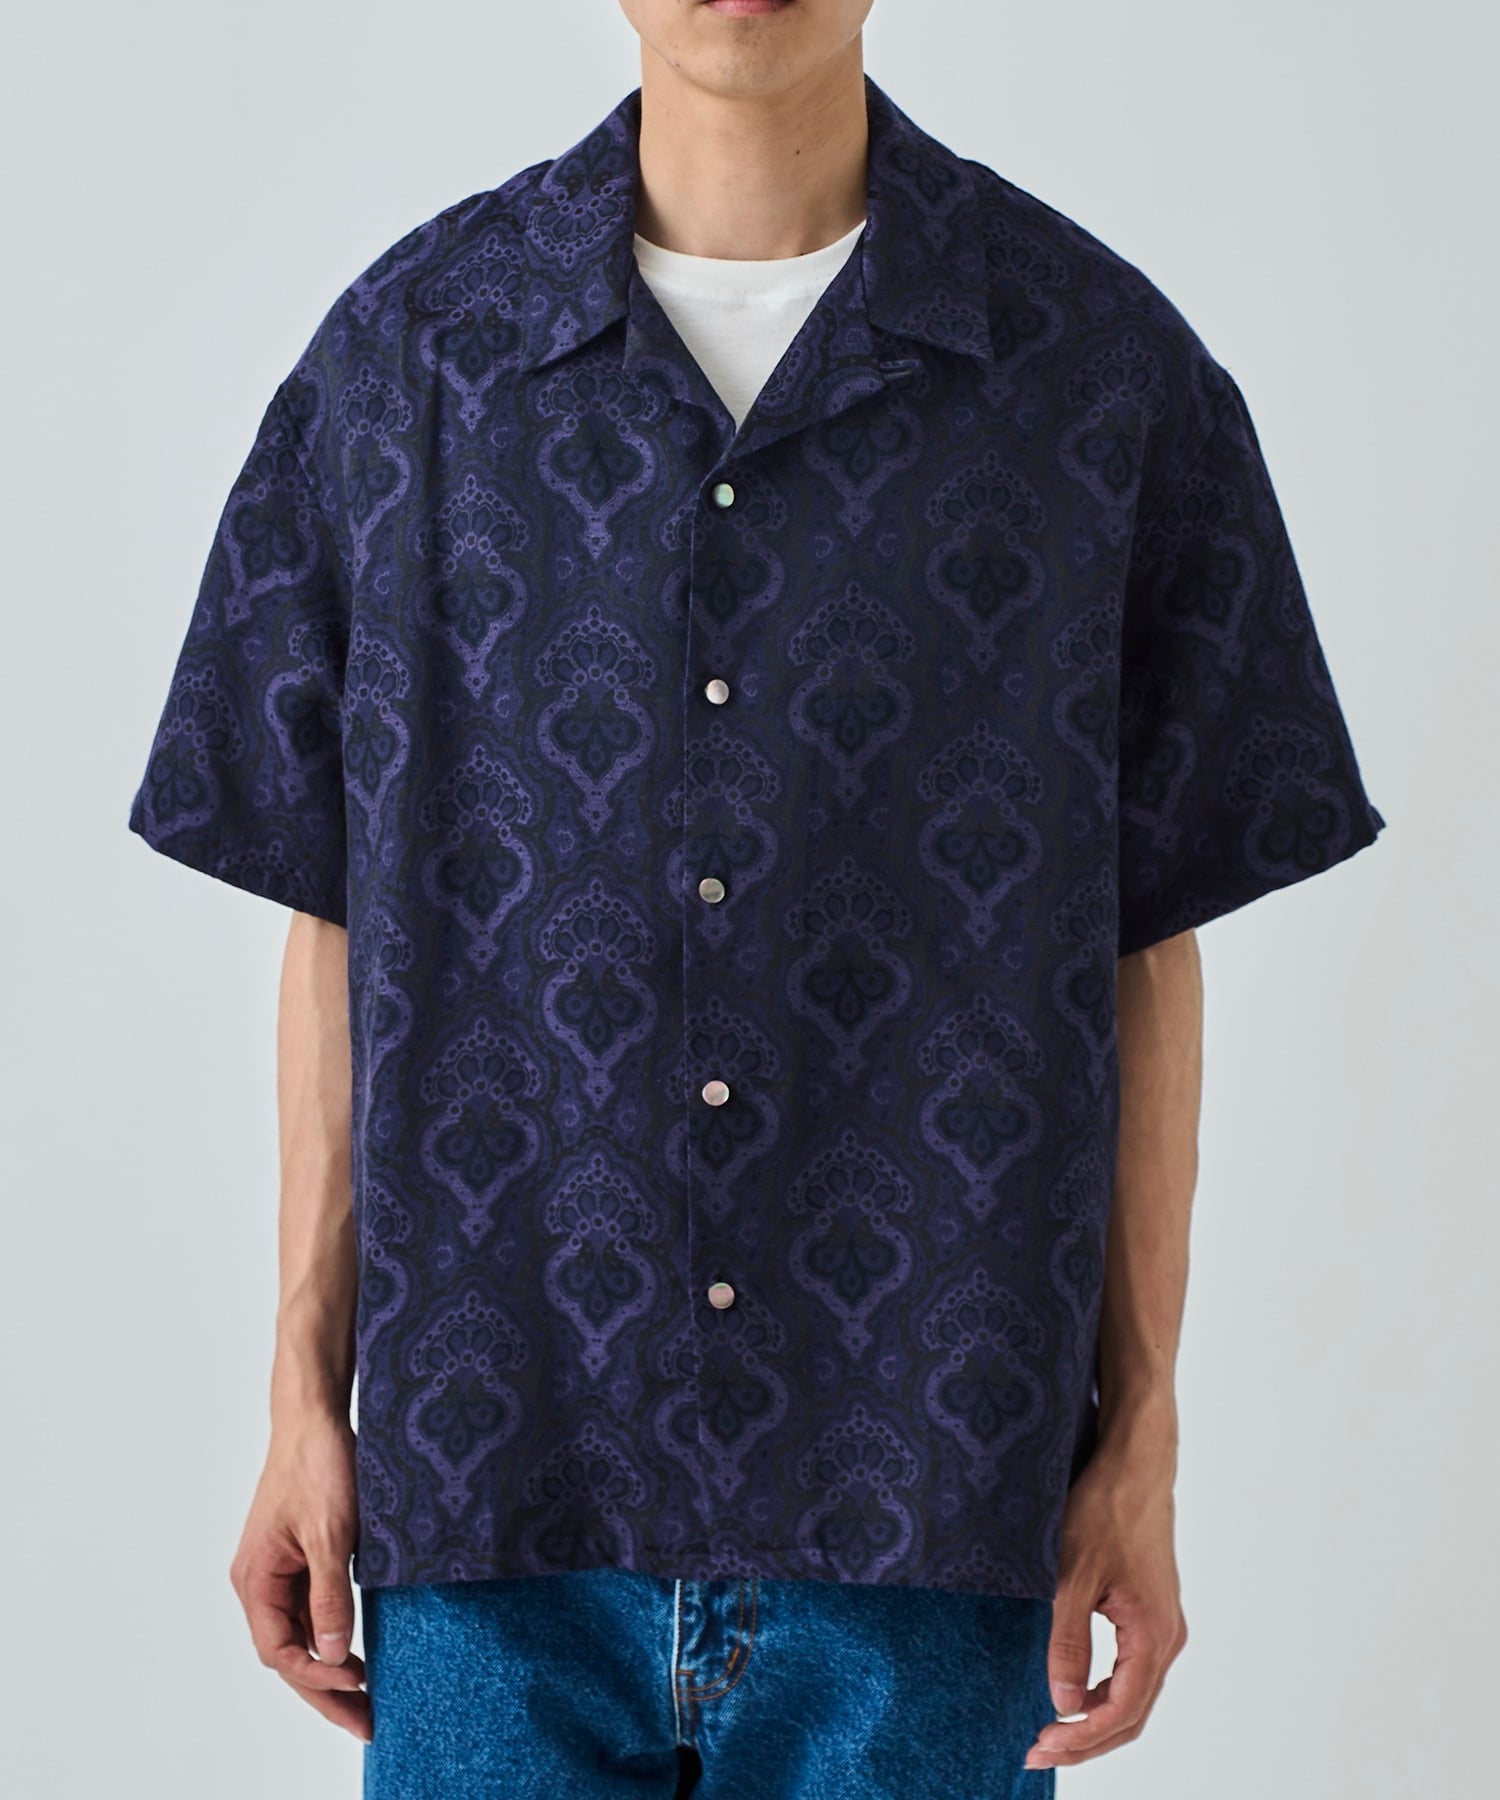 Aloha shirt-Damask jacquard